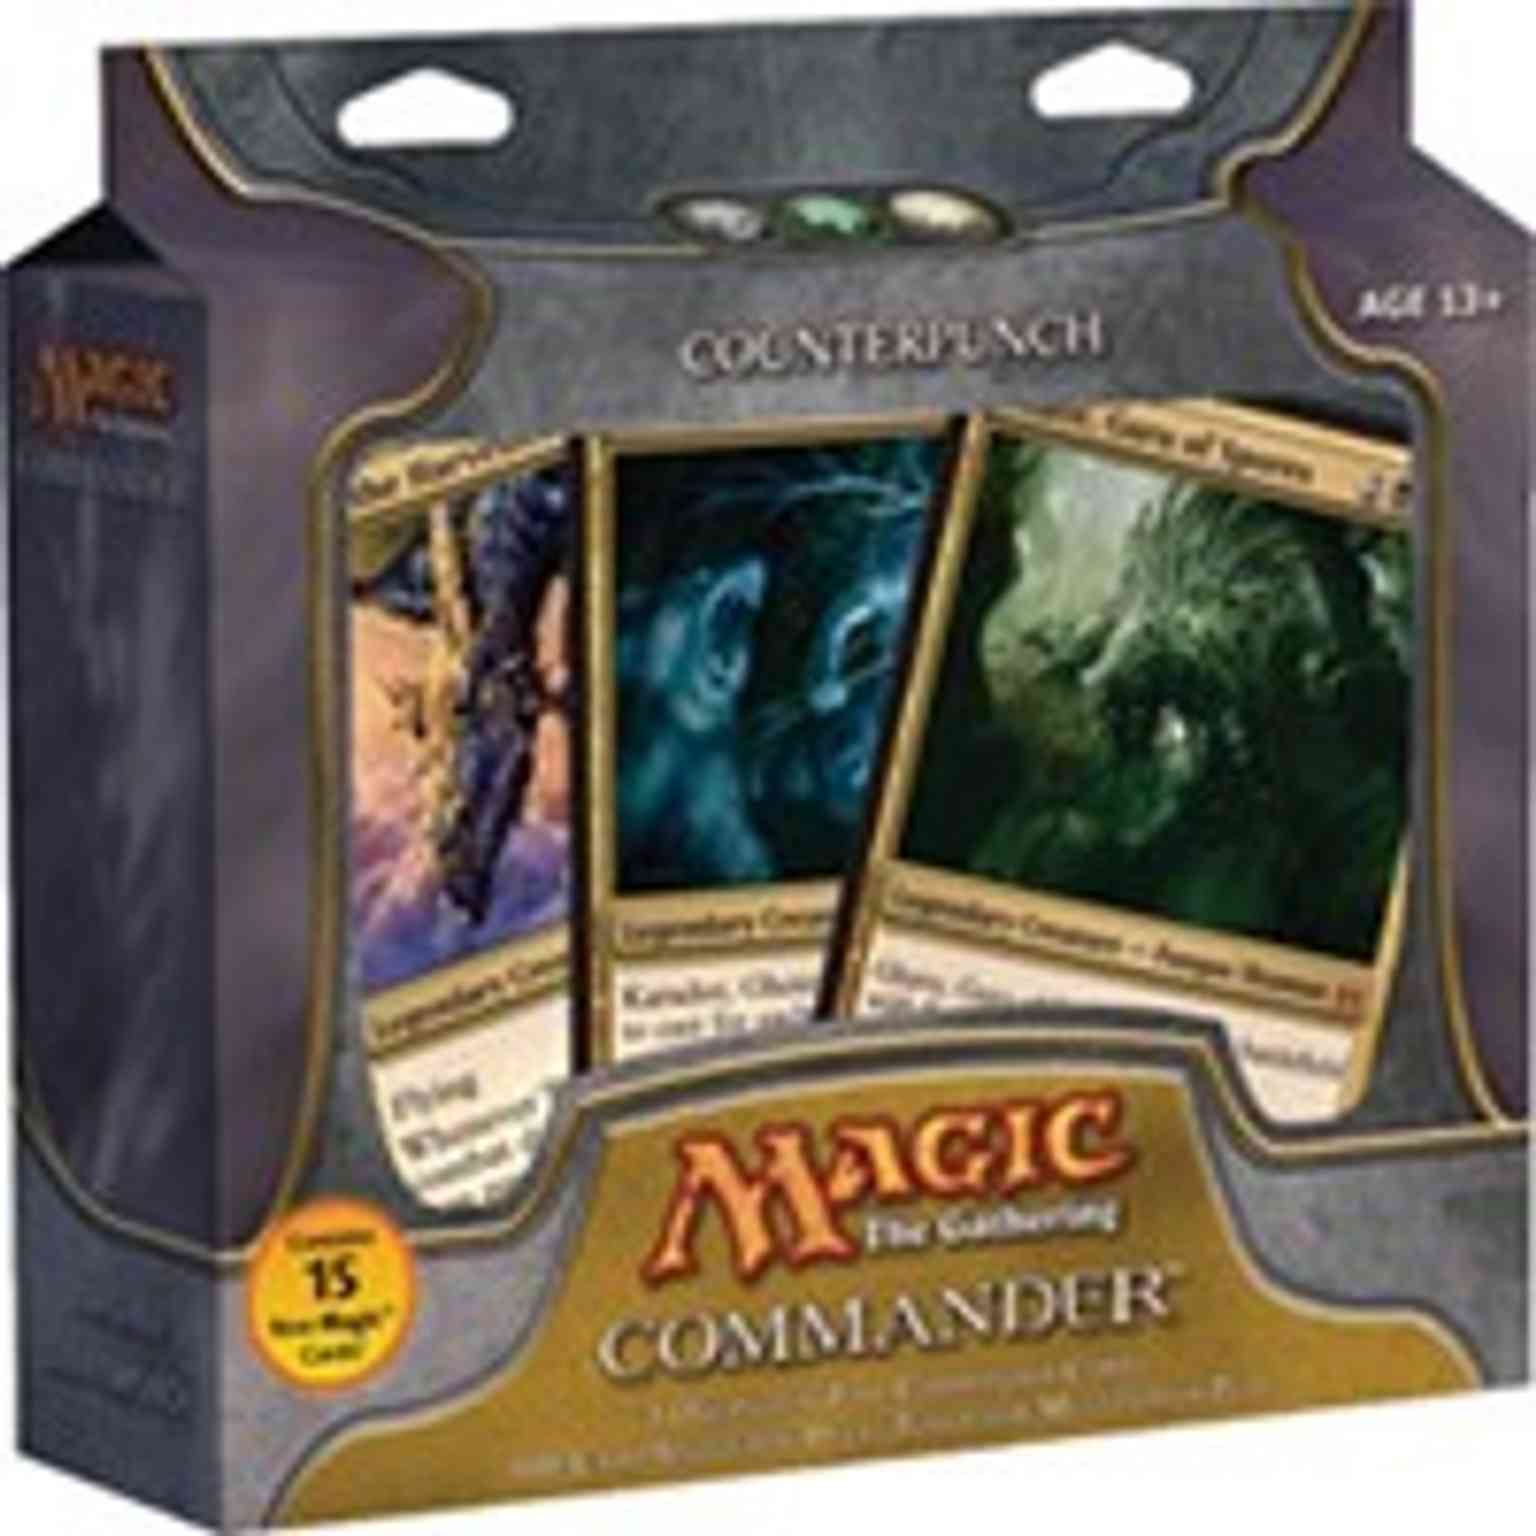 Commander - Counterpunch Deck magic card front